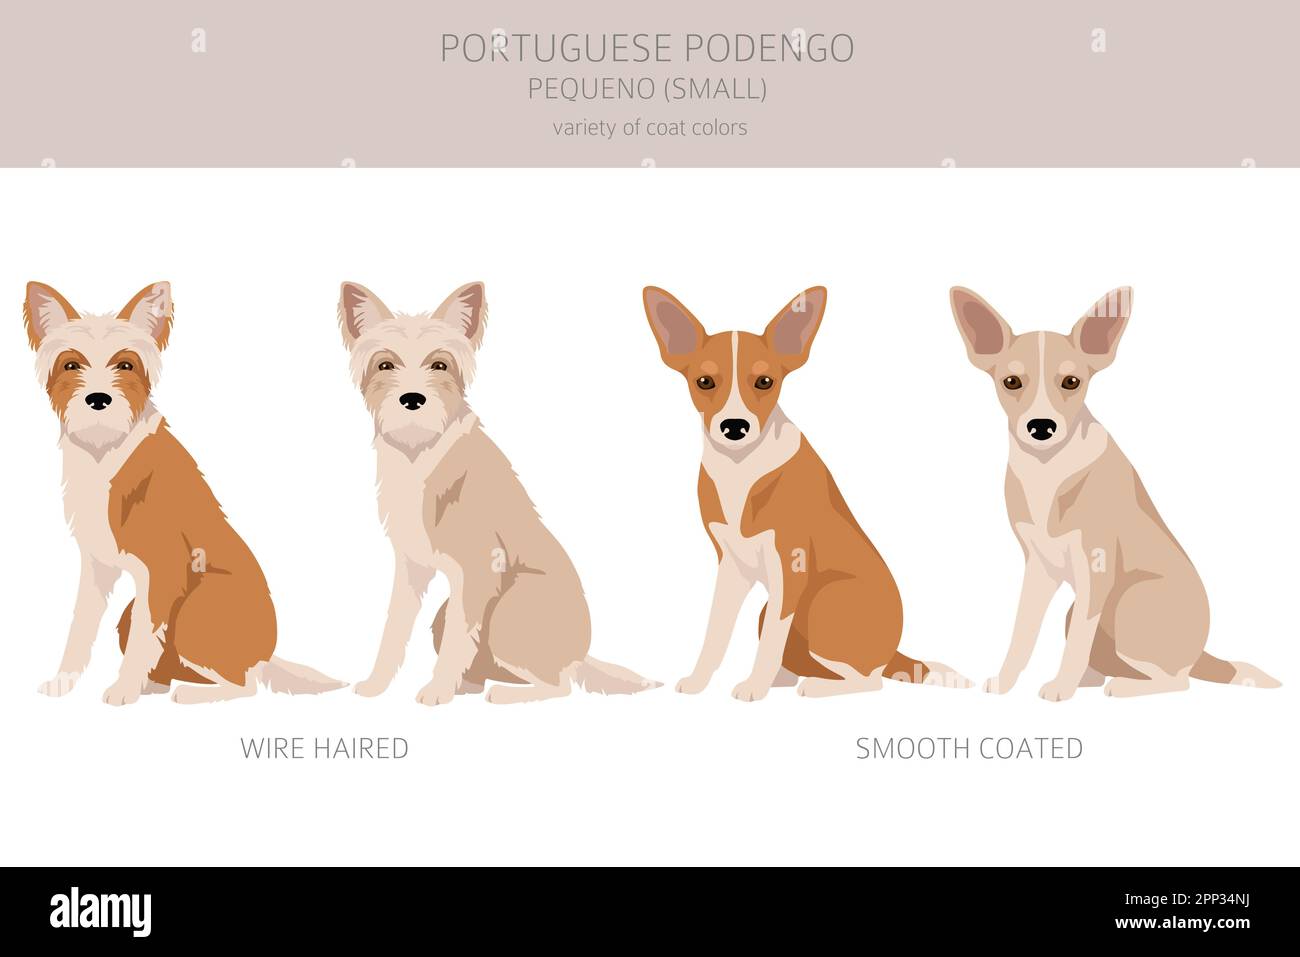 Portuguese Podengo Pequeno clipart. Different poses, coat colors set.  Vector illustration Stock Vector